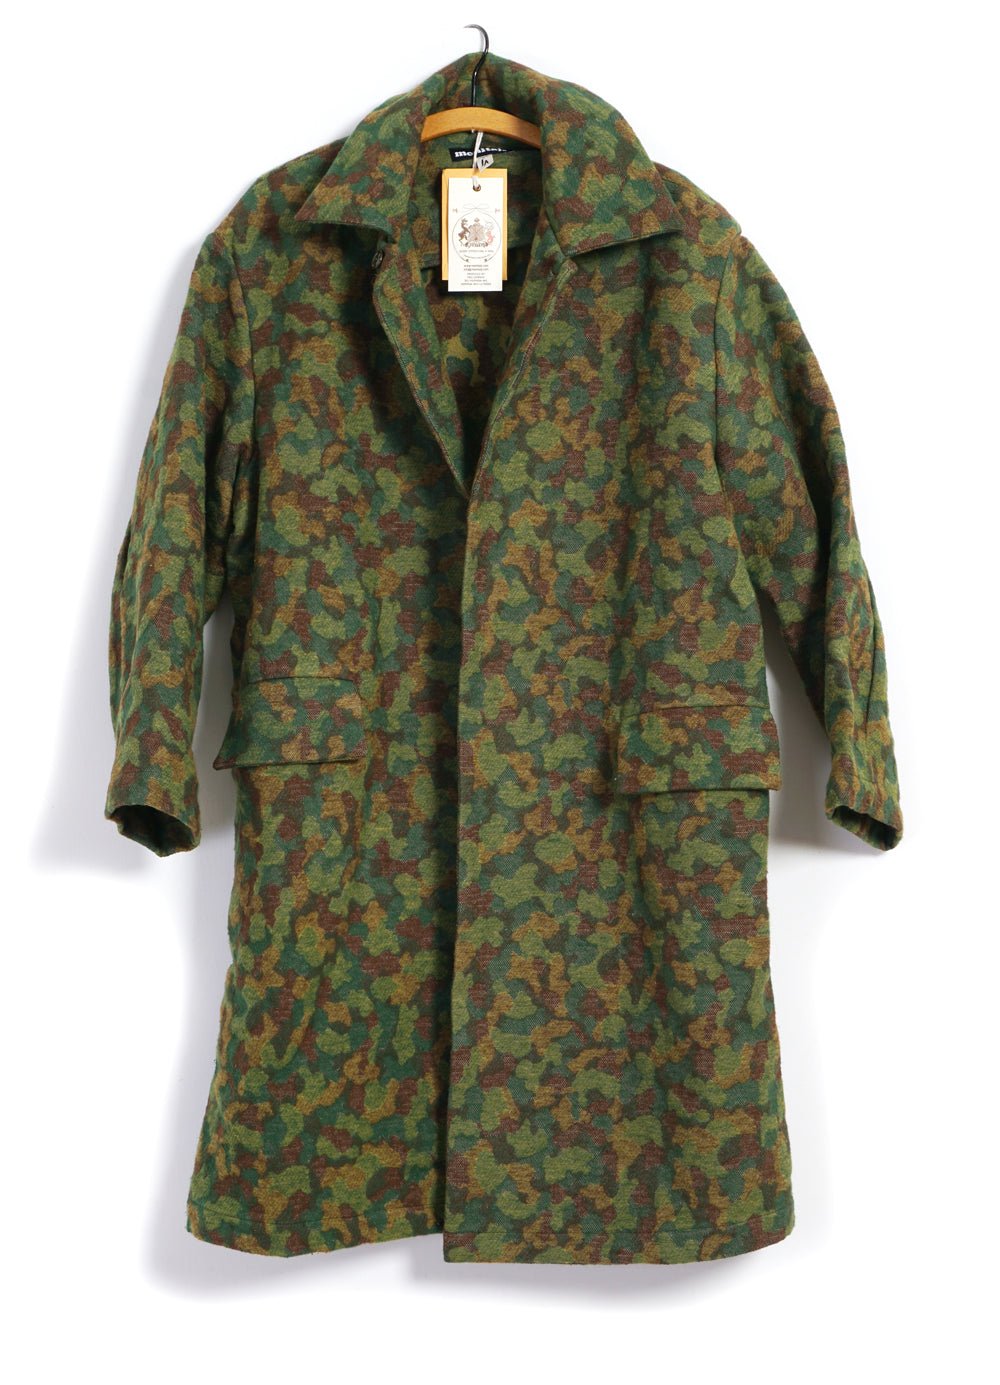 MONITALY - JUTE COAT | Oversized Coat With Belt | Green Jacquard Camo - HANSEN Garments